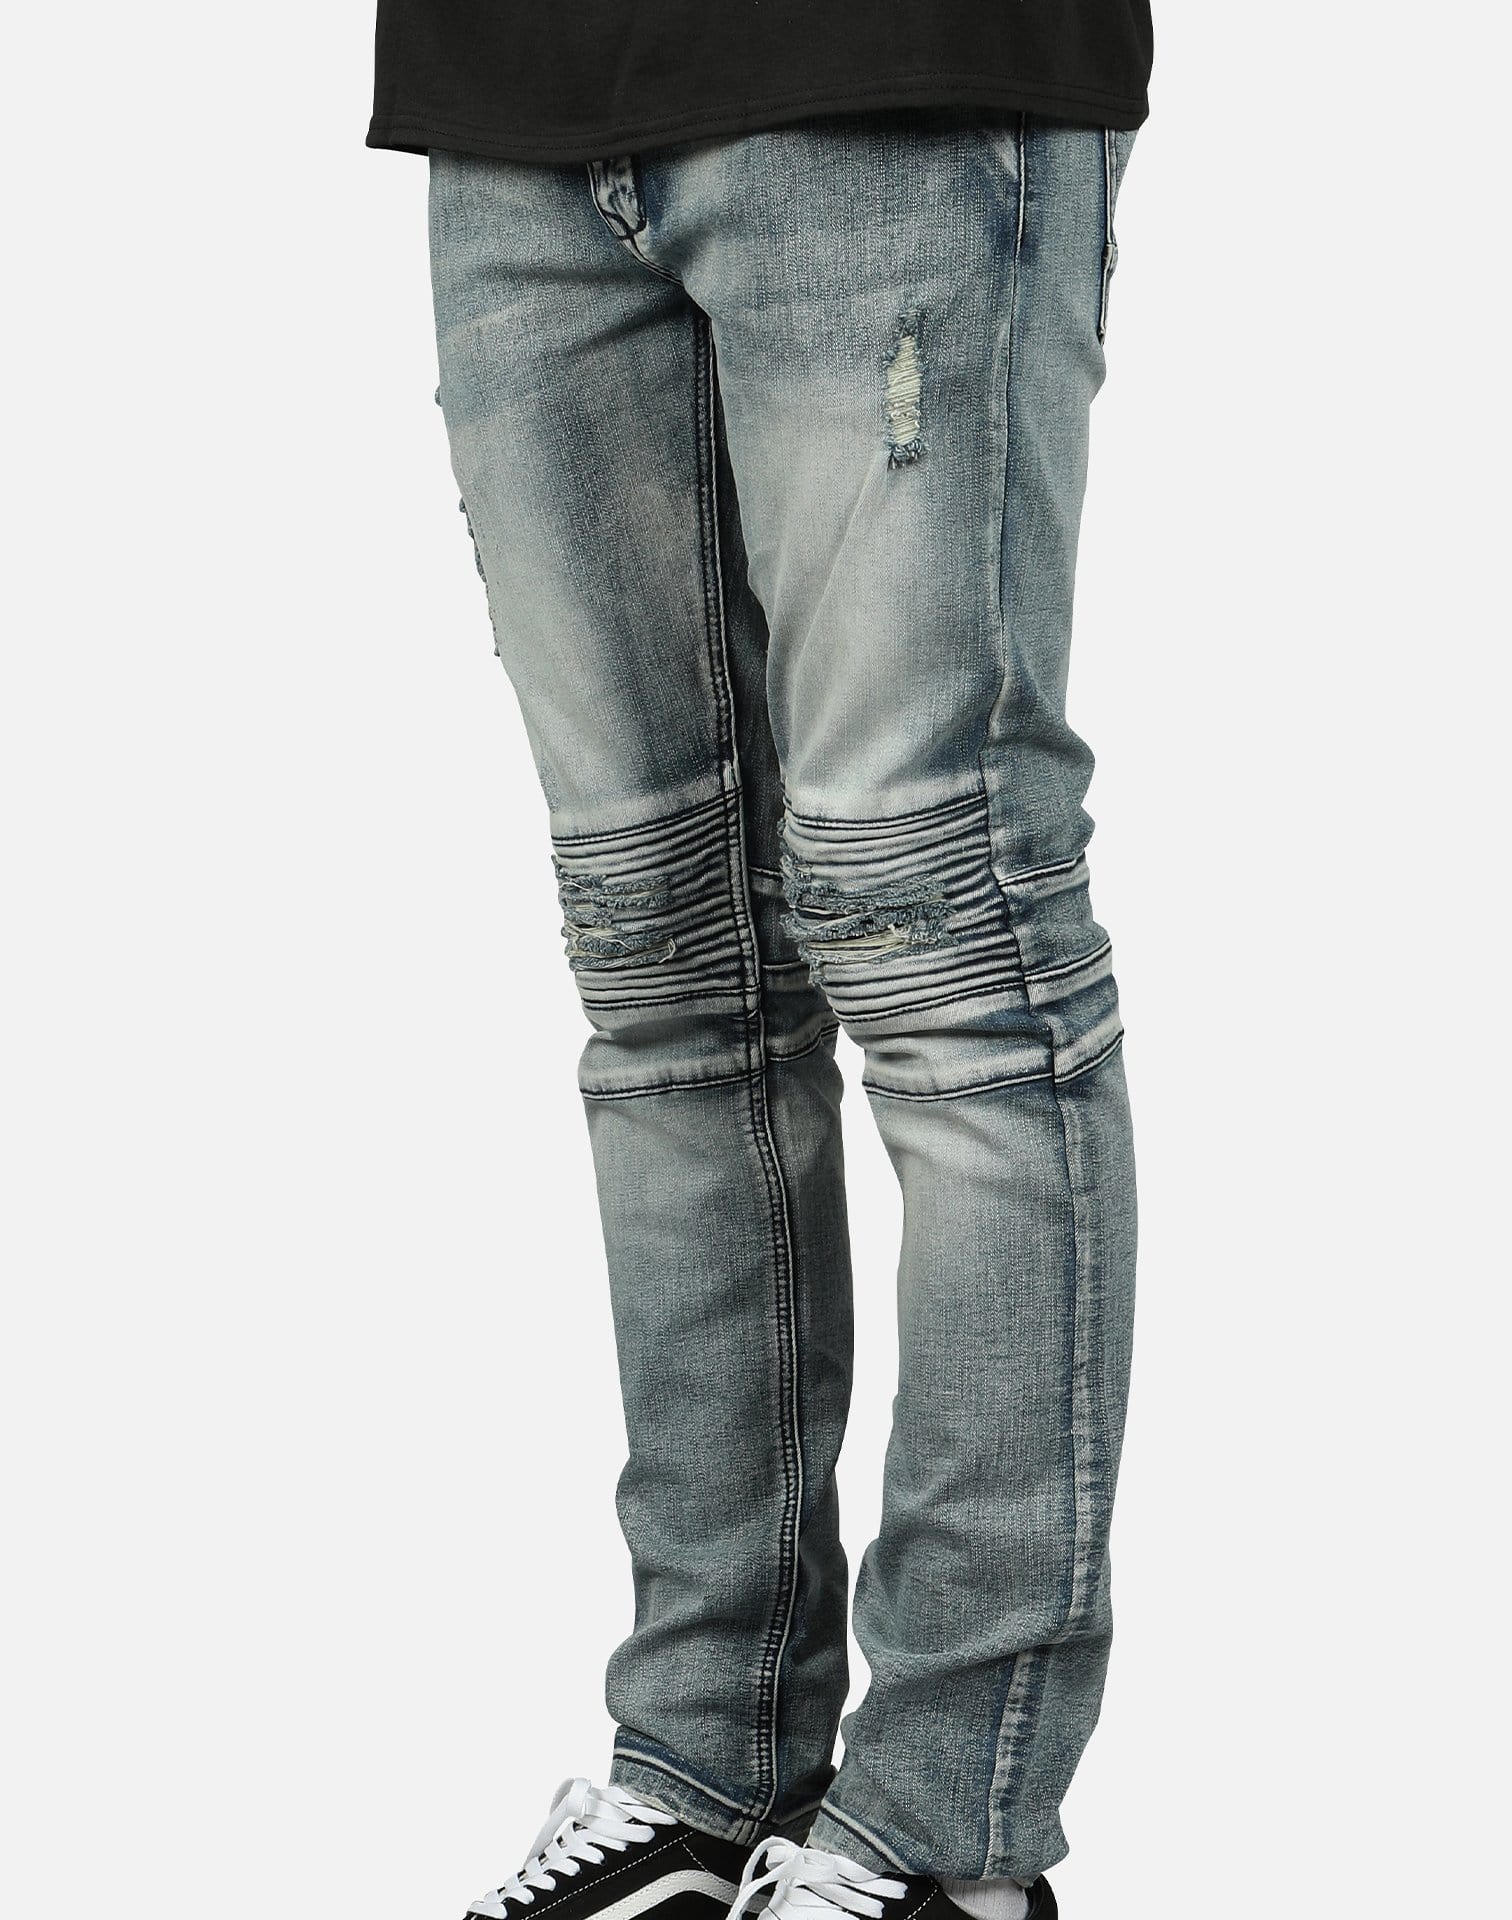 mens distressed moto jeans